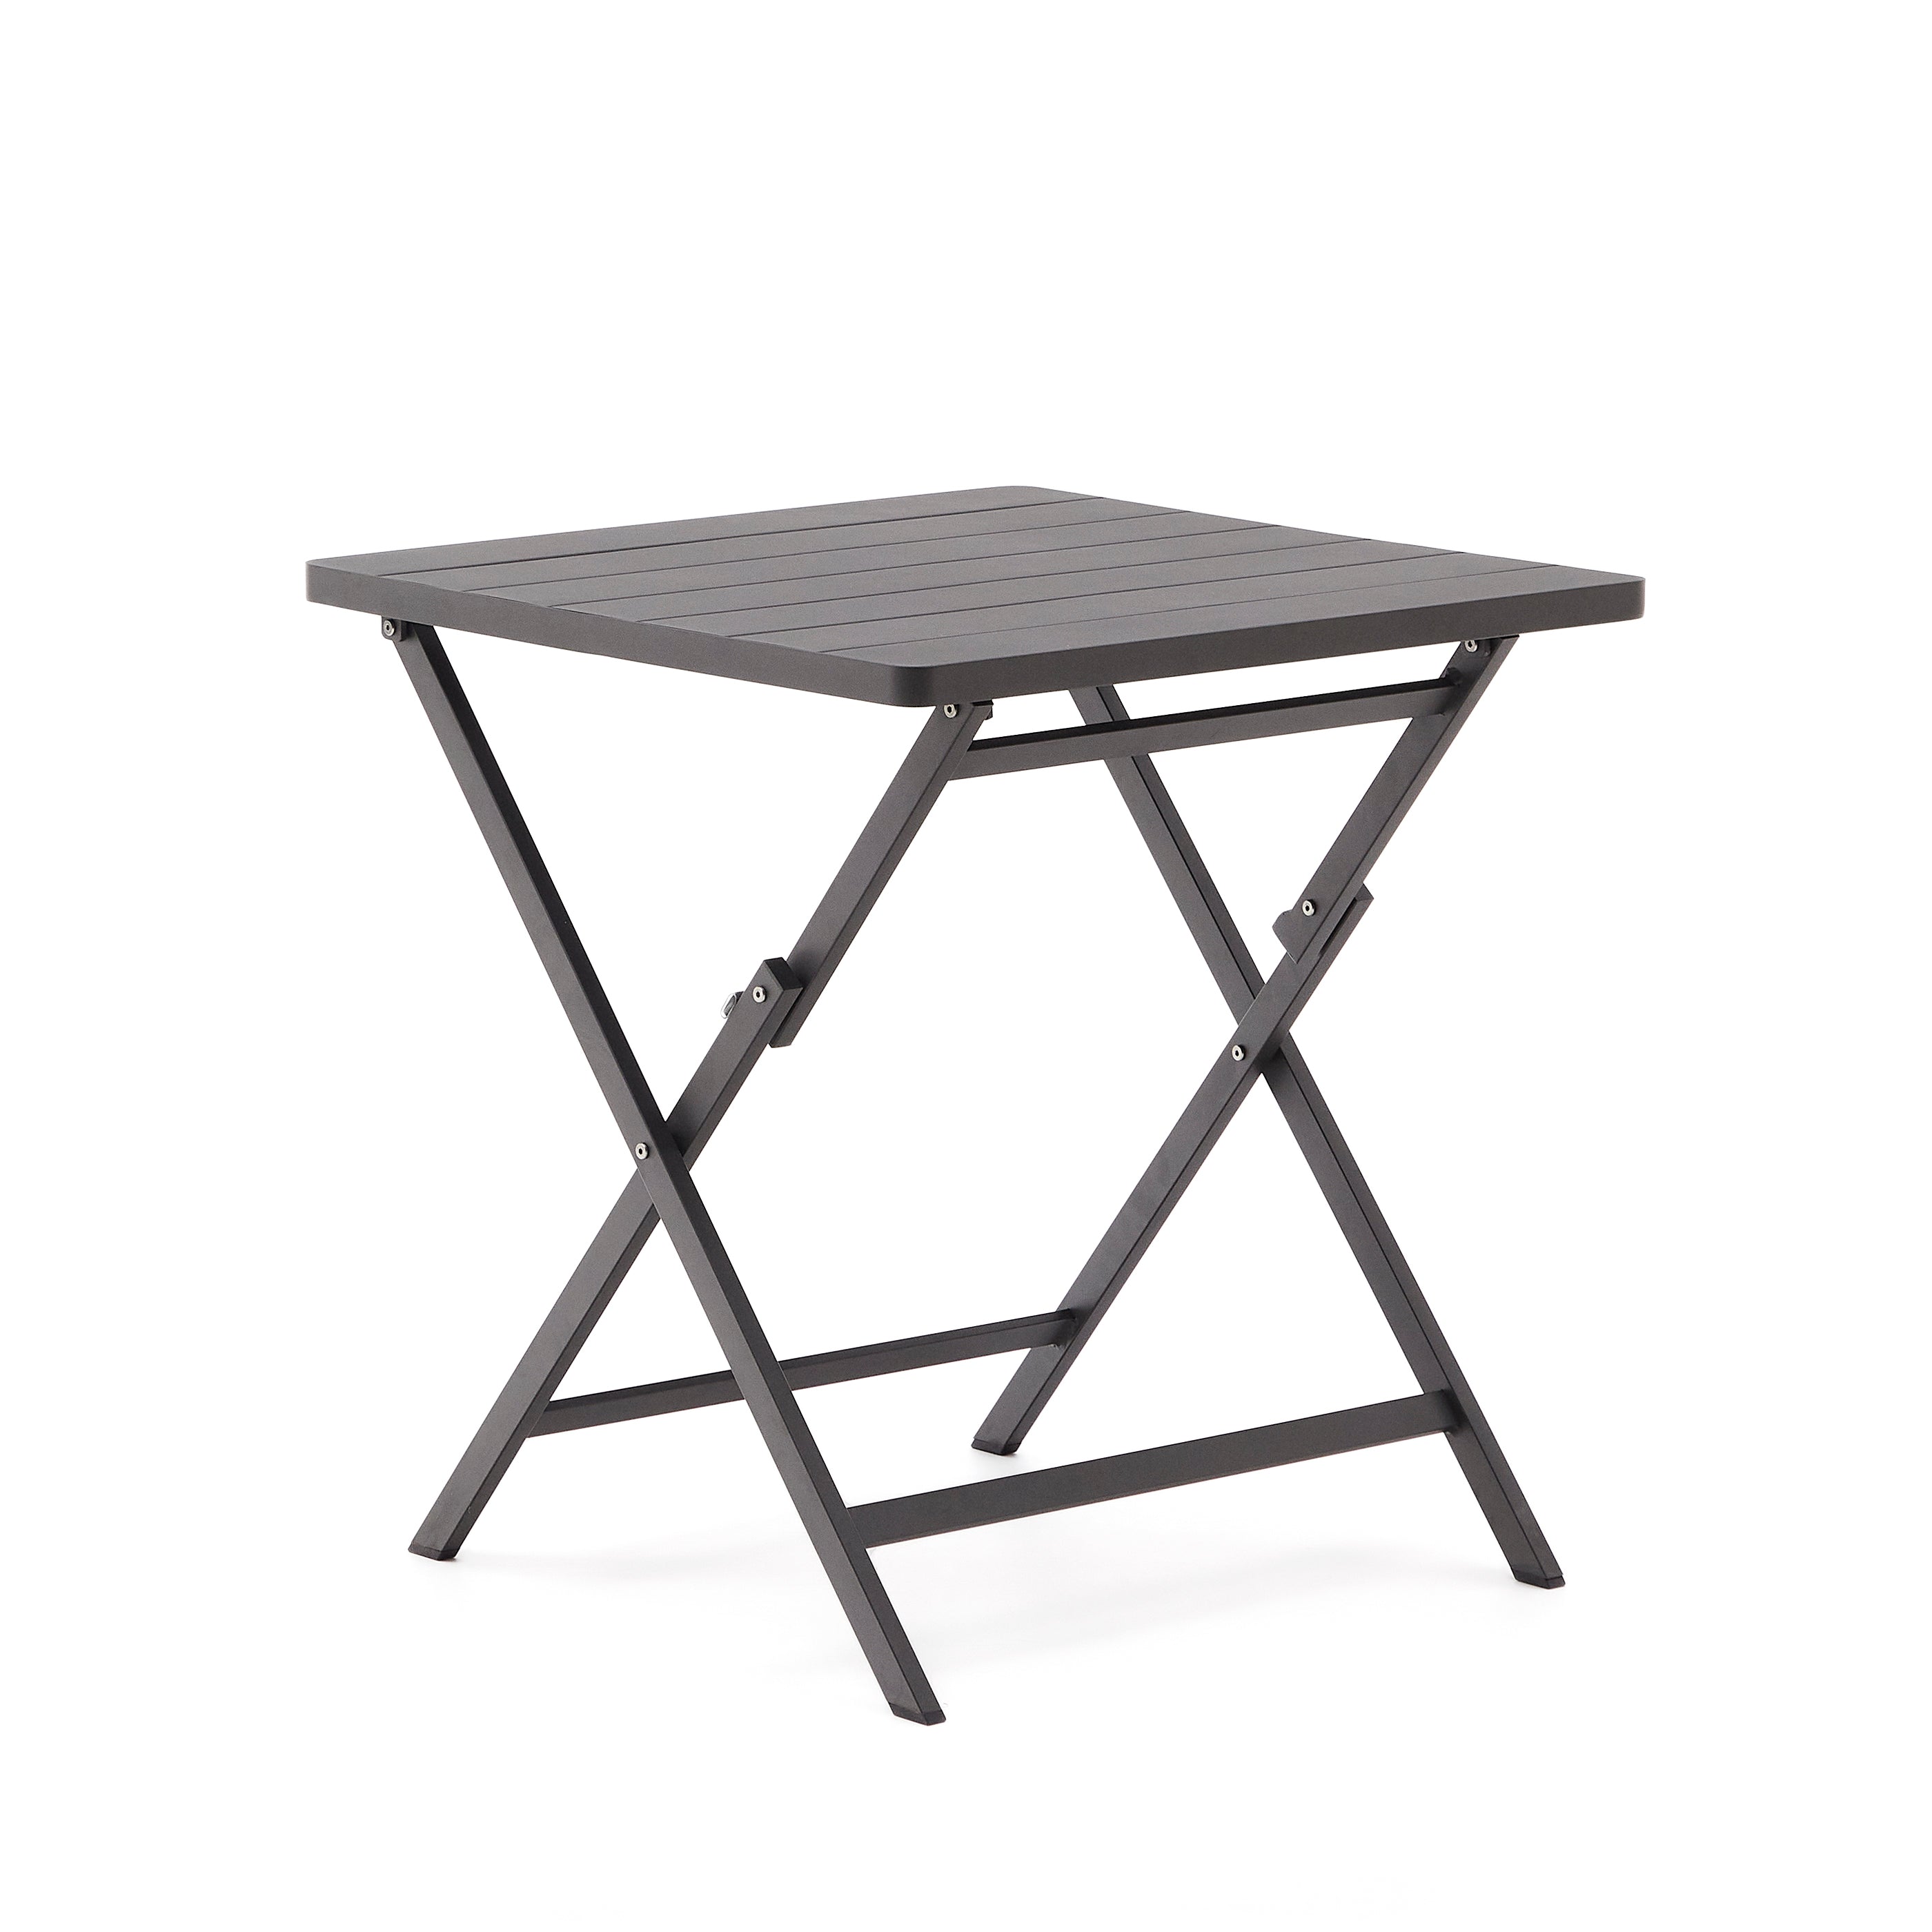 Torreta folding outdoor table made of aluminum, black coating, 70 x 70 cm